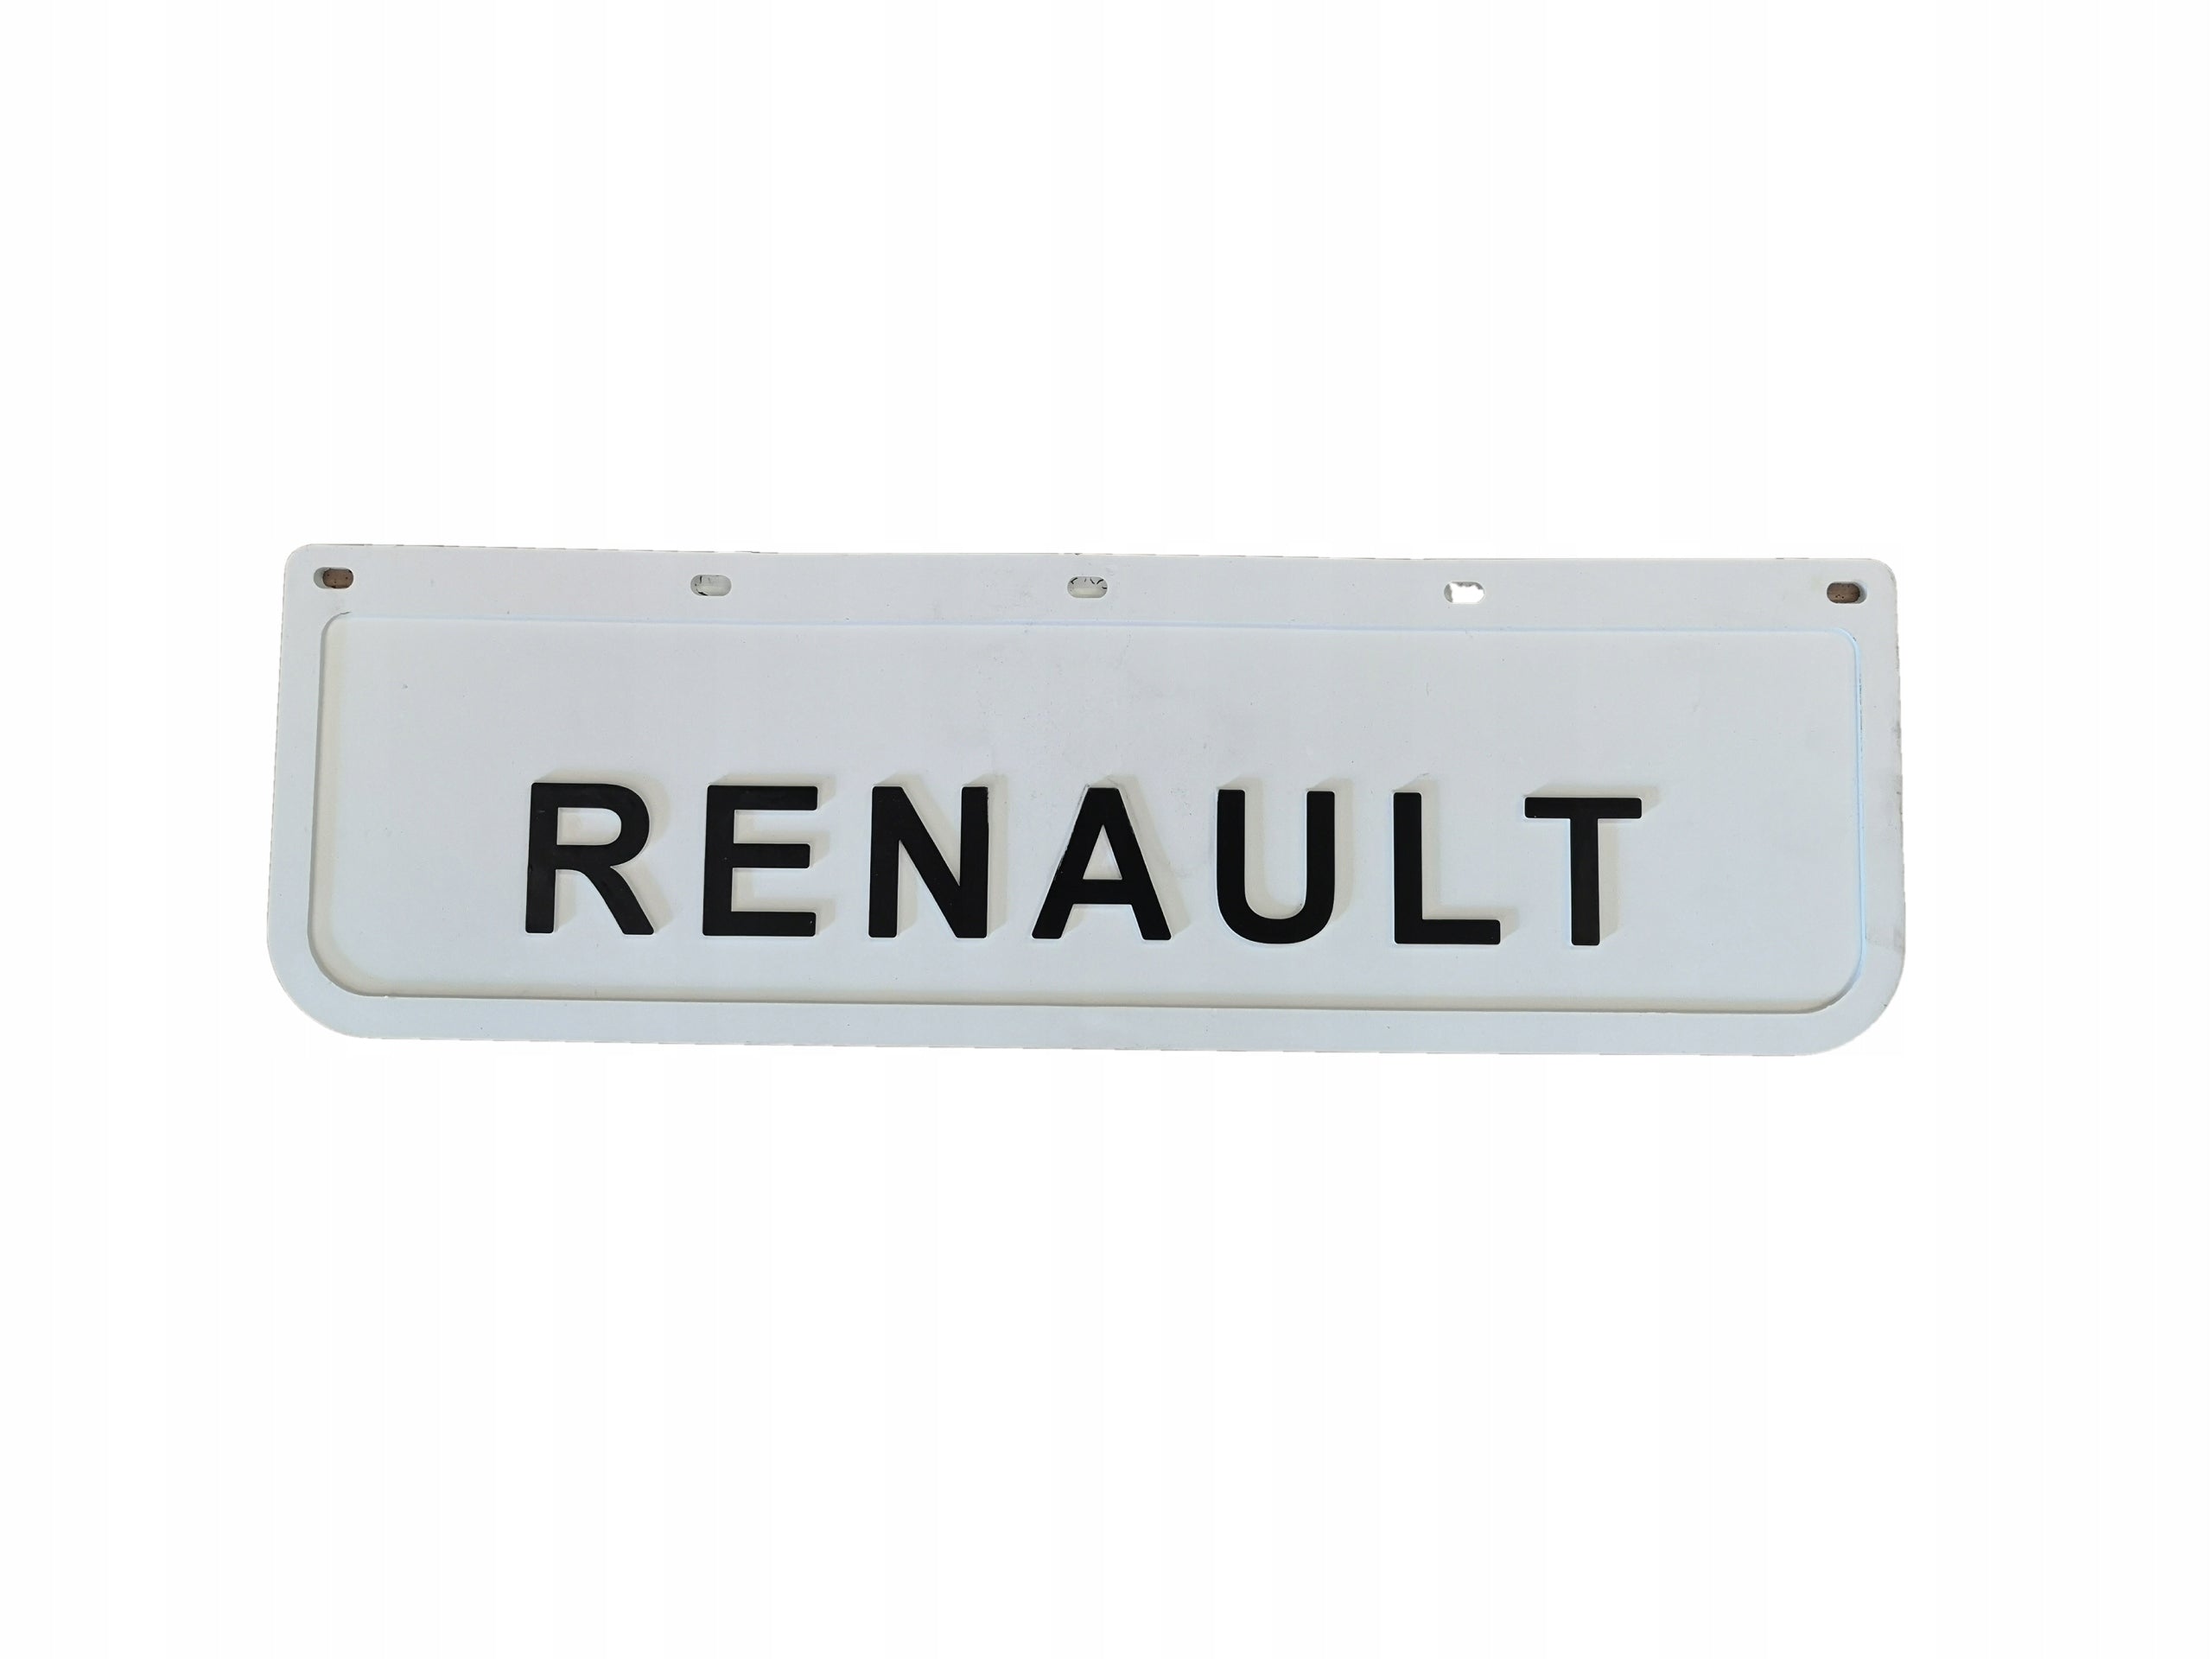 Skvettlapp Renault, 60x18cm - Hvit